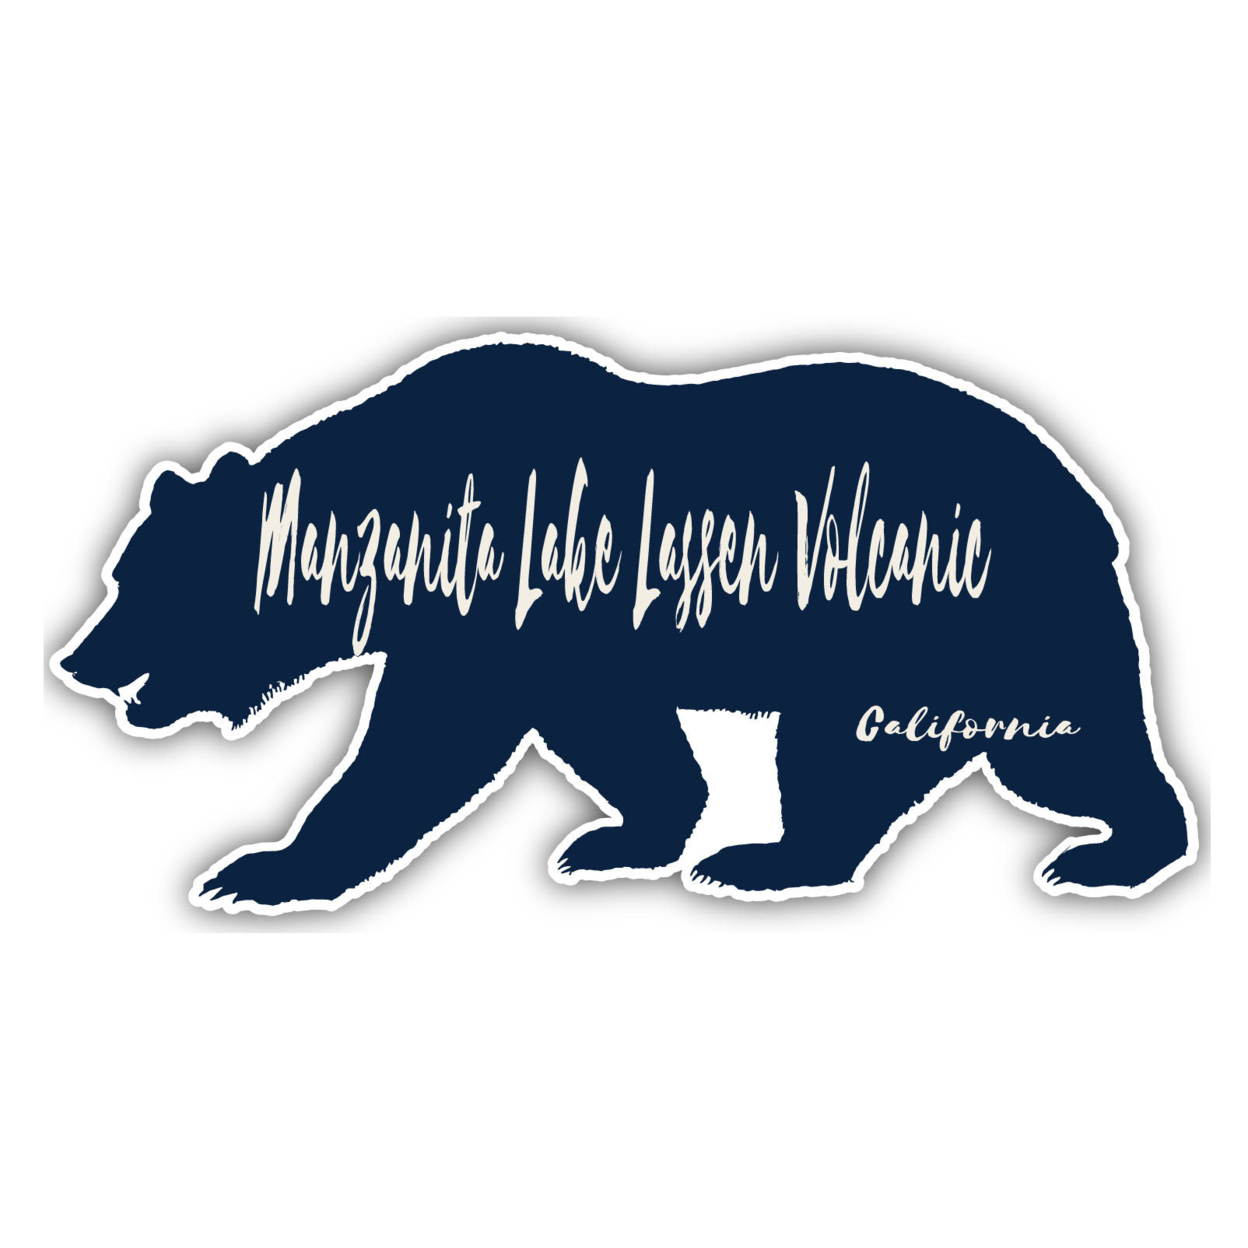 Manzanita Lake Lassen Volcanic California Souvenir Decorative Stickers (Choose Theme And Size) - 4-Inch, Bear